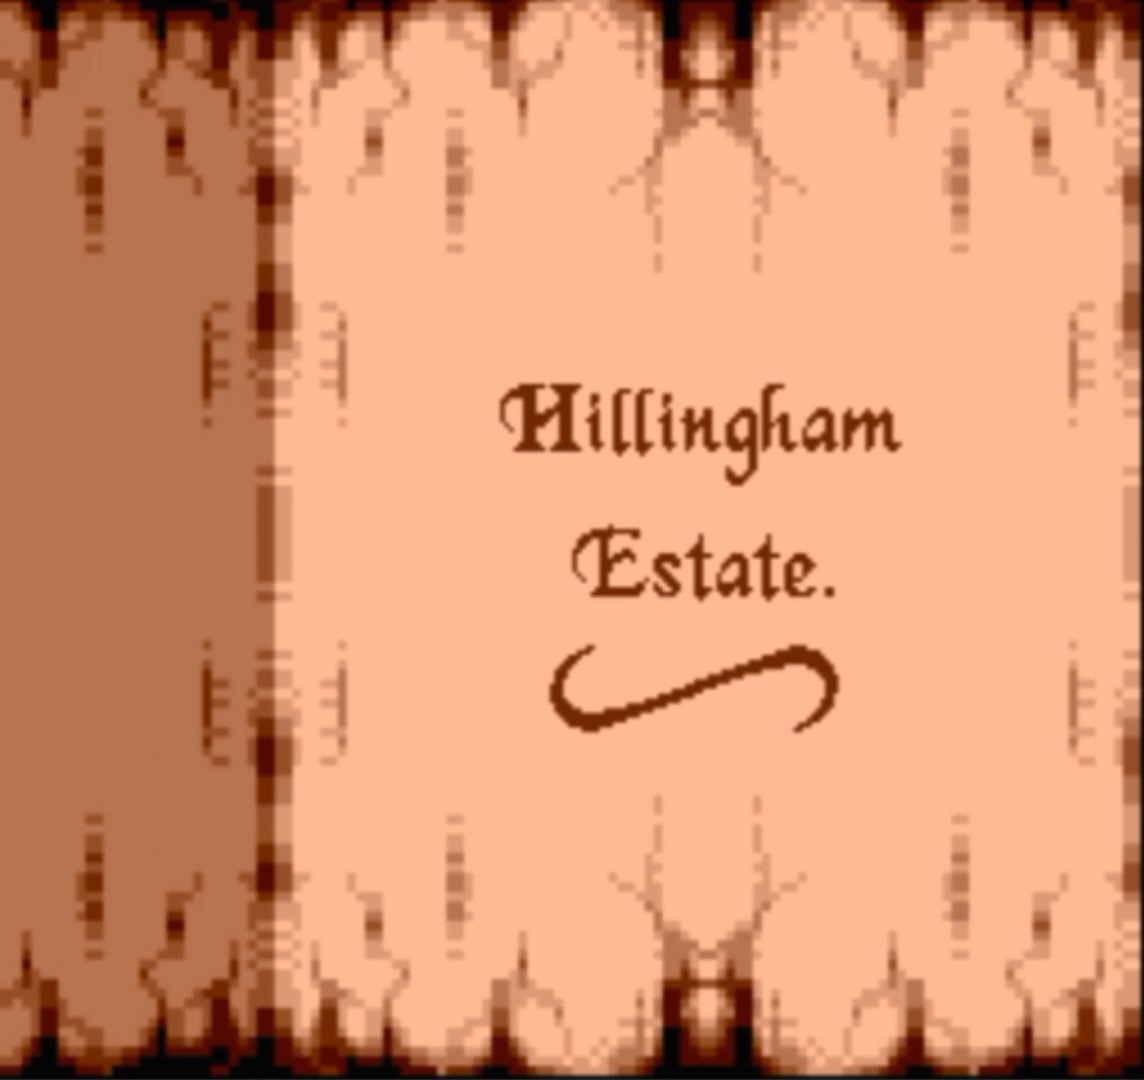 Sega Mega Drive 2 (Smd) 16-bit Bram Stoker's Dracula Level 4 Hillingham Estate Прохождение